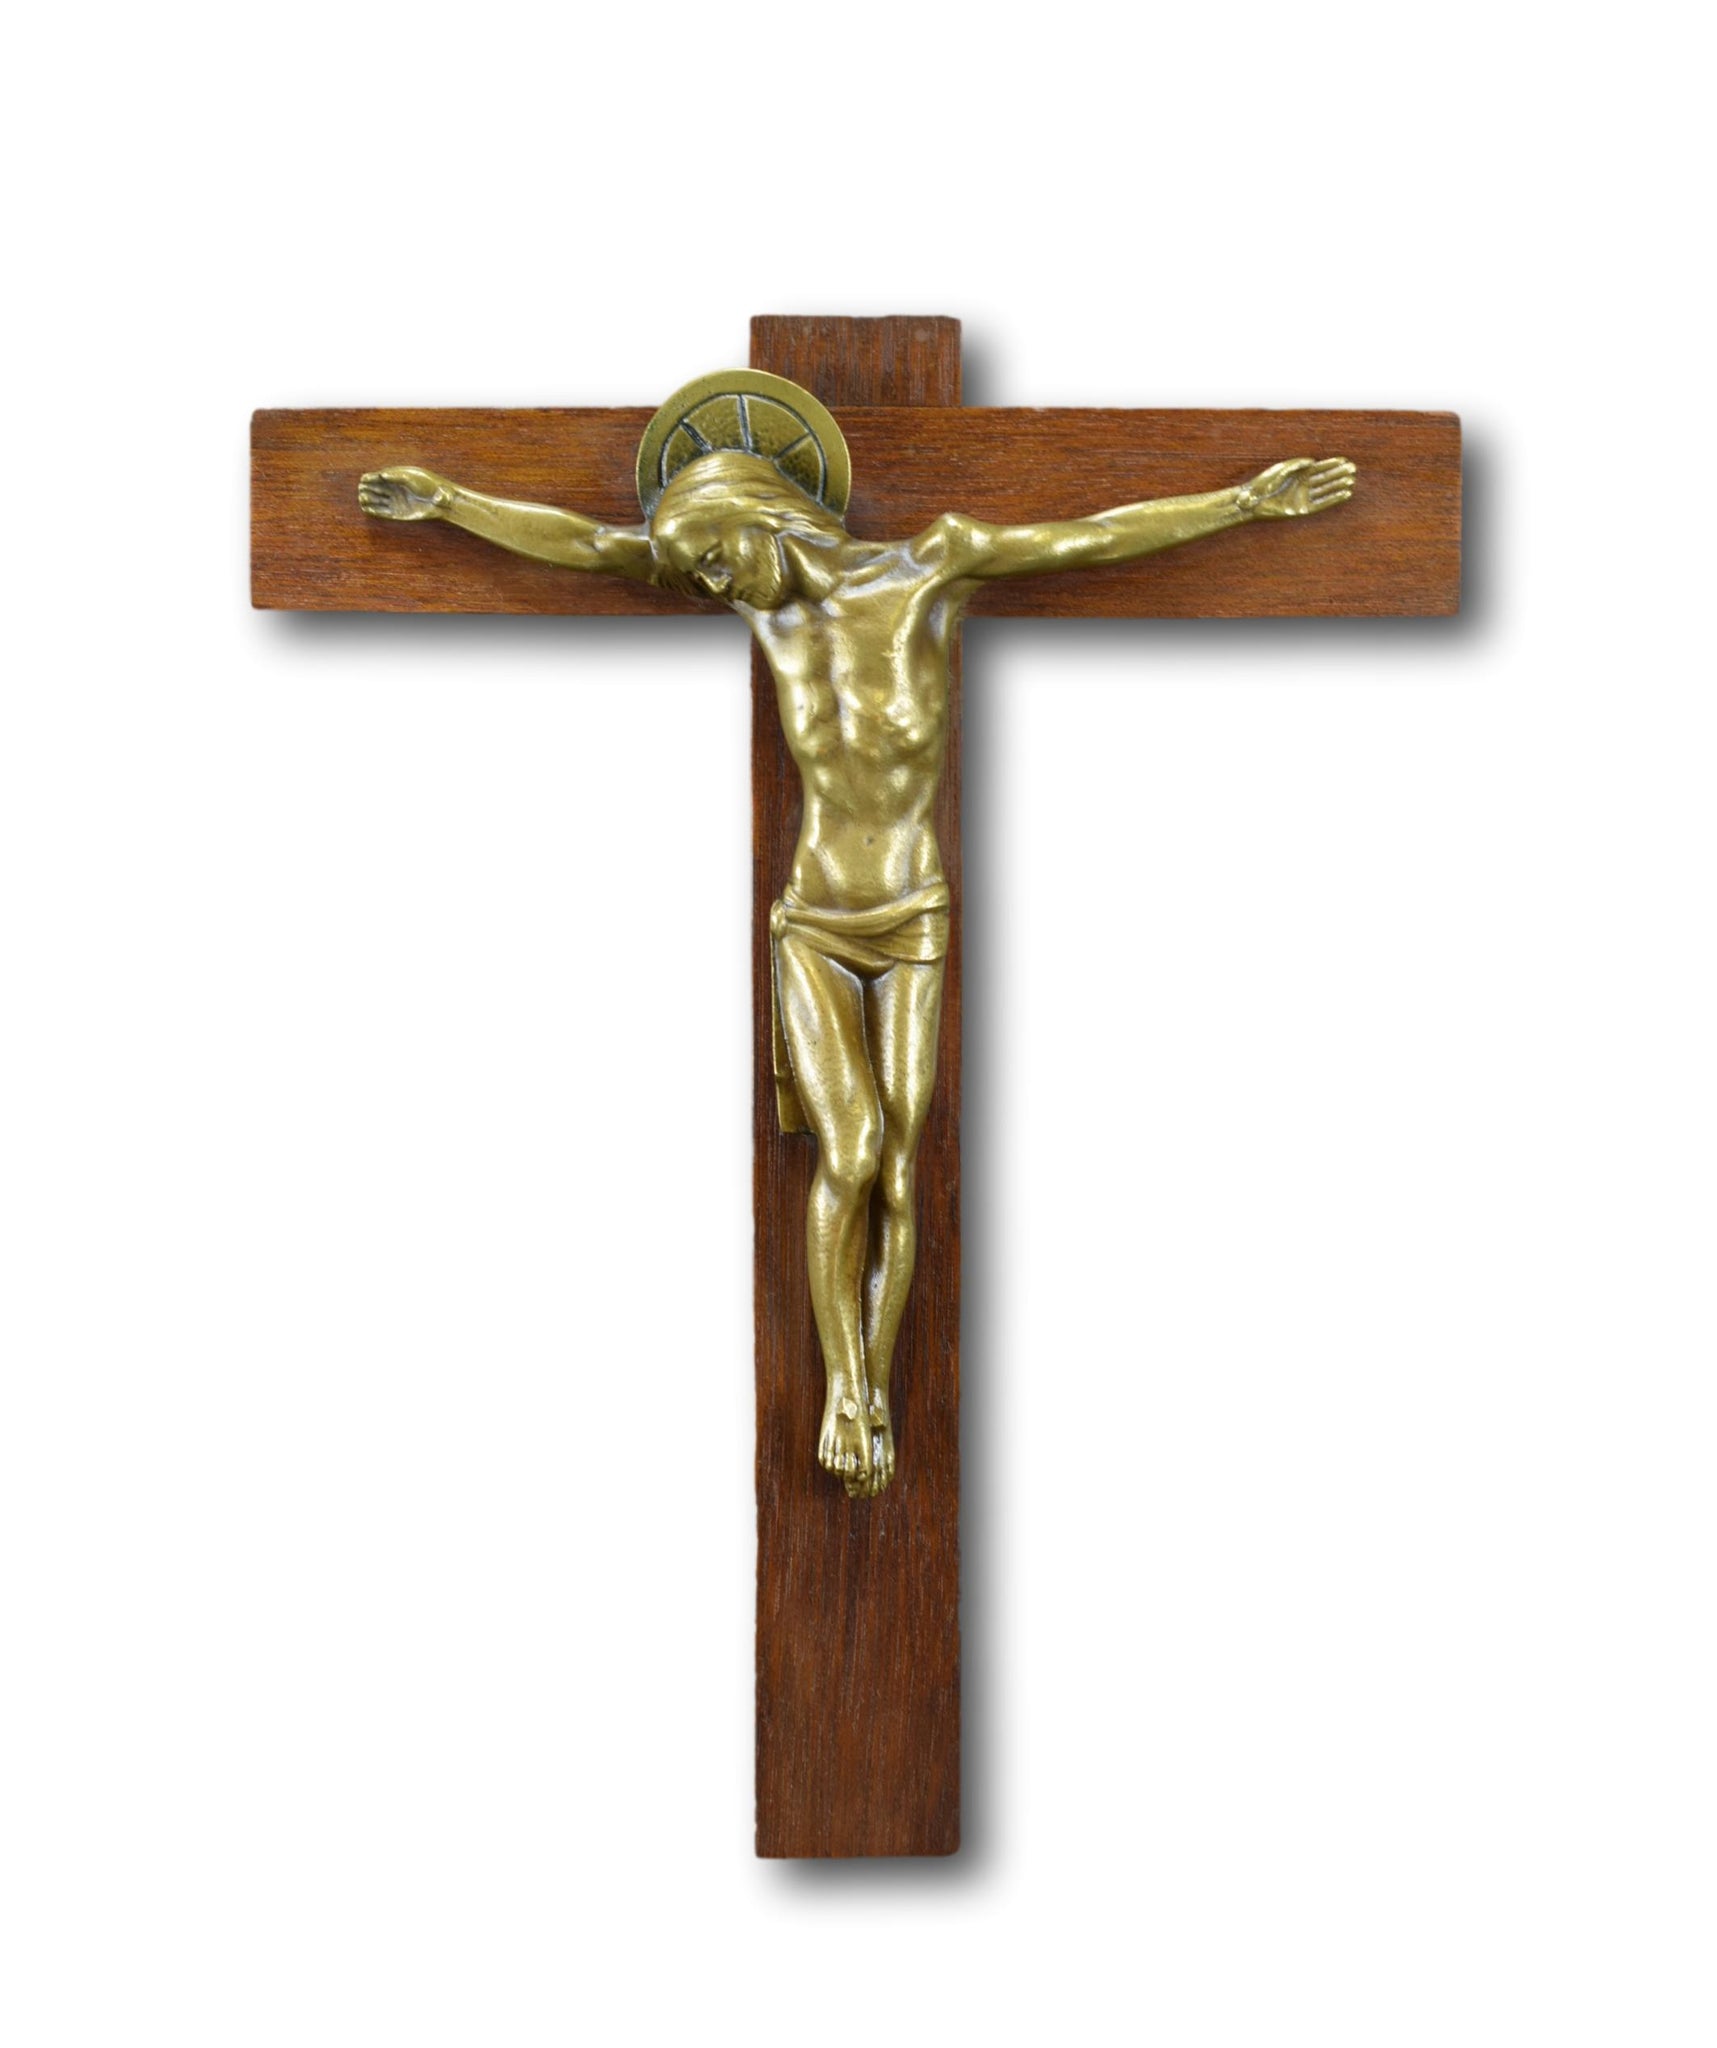 10" French Art Deco Bronze Wall Cross Crucifix by Hartmann